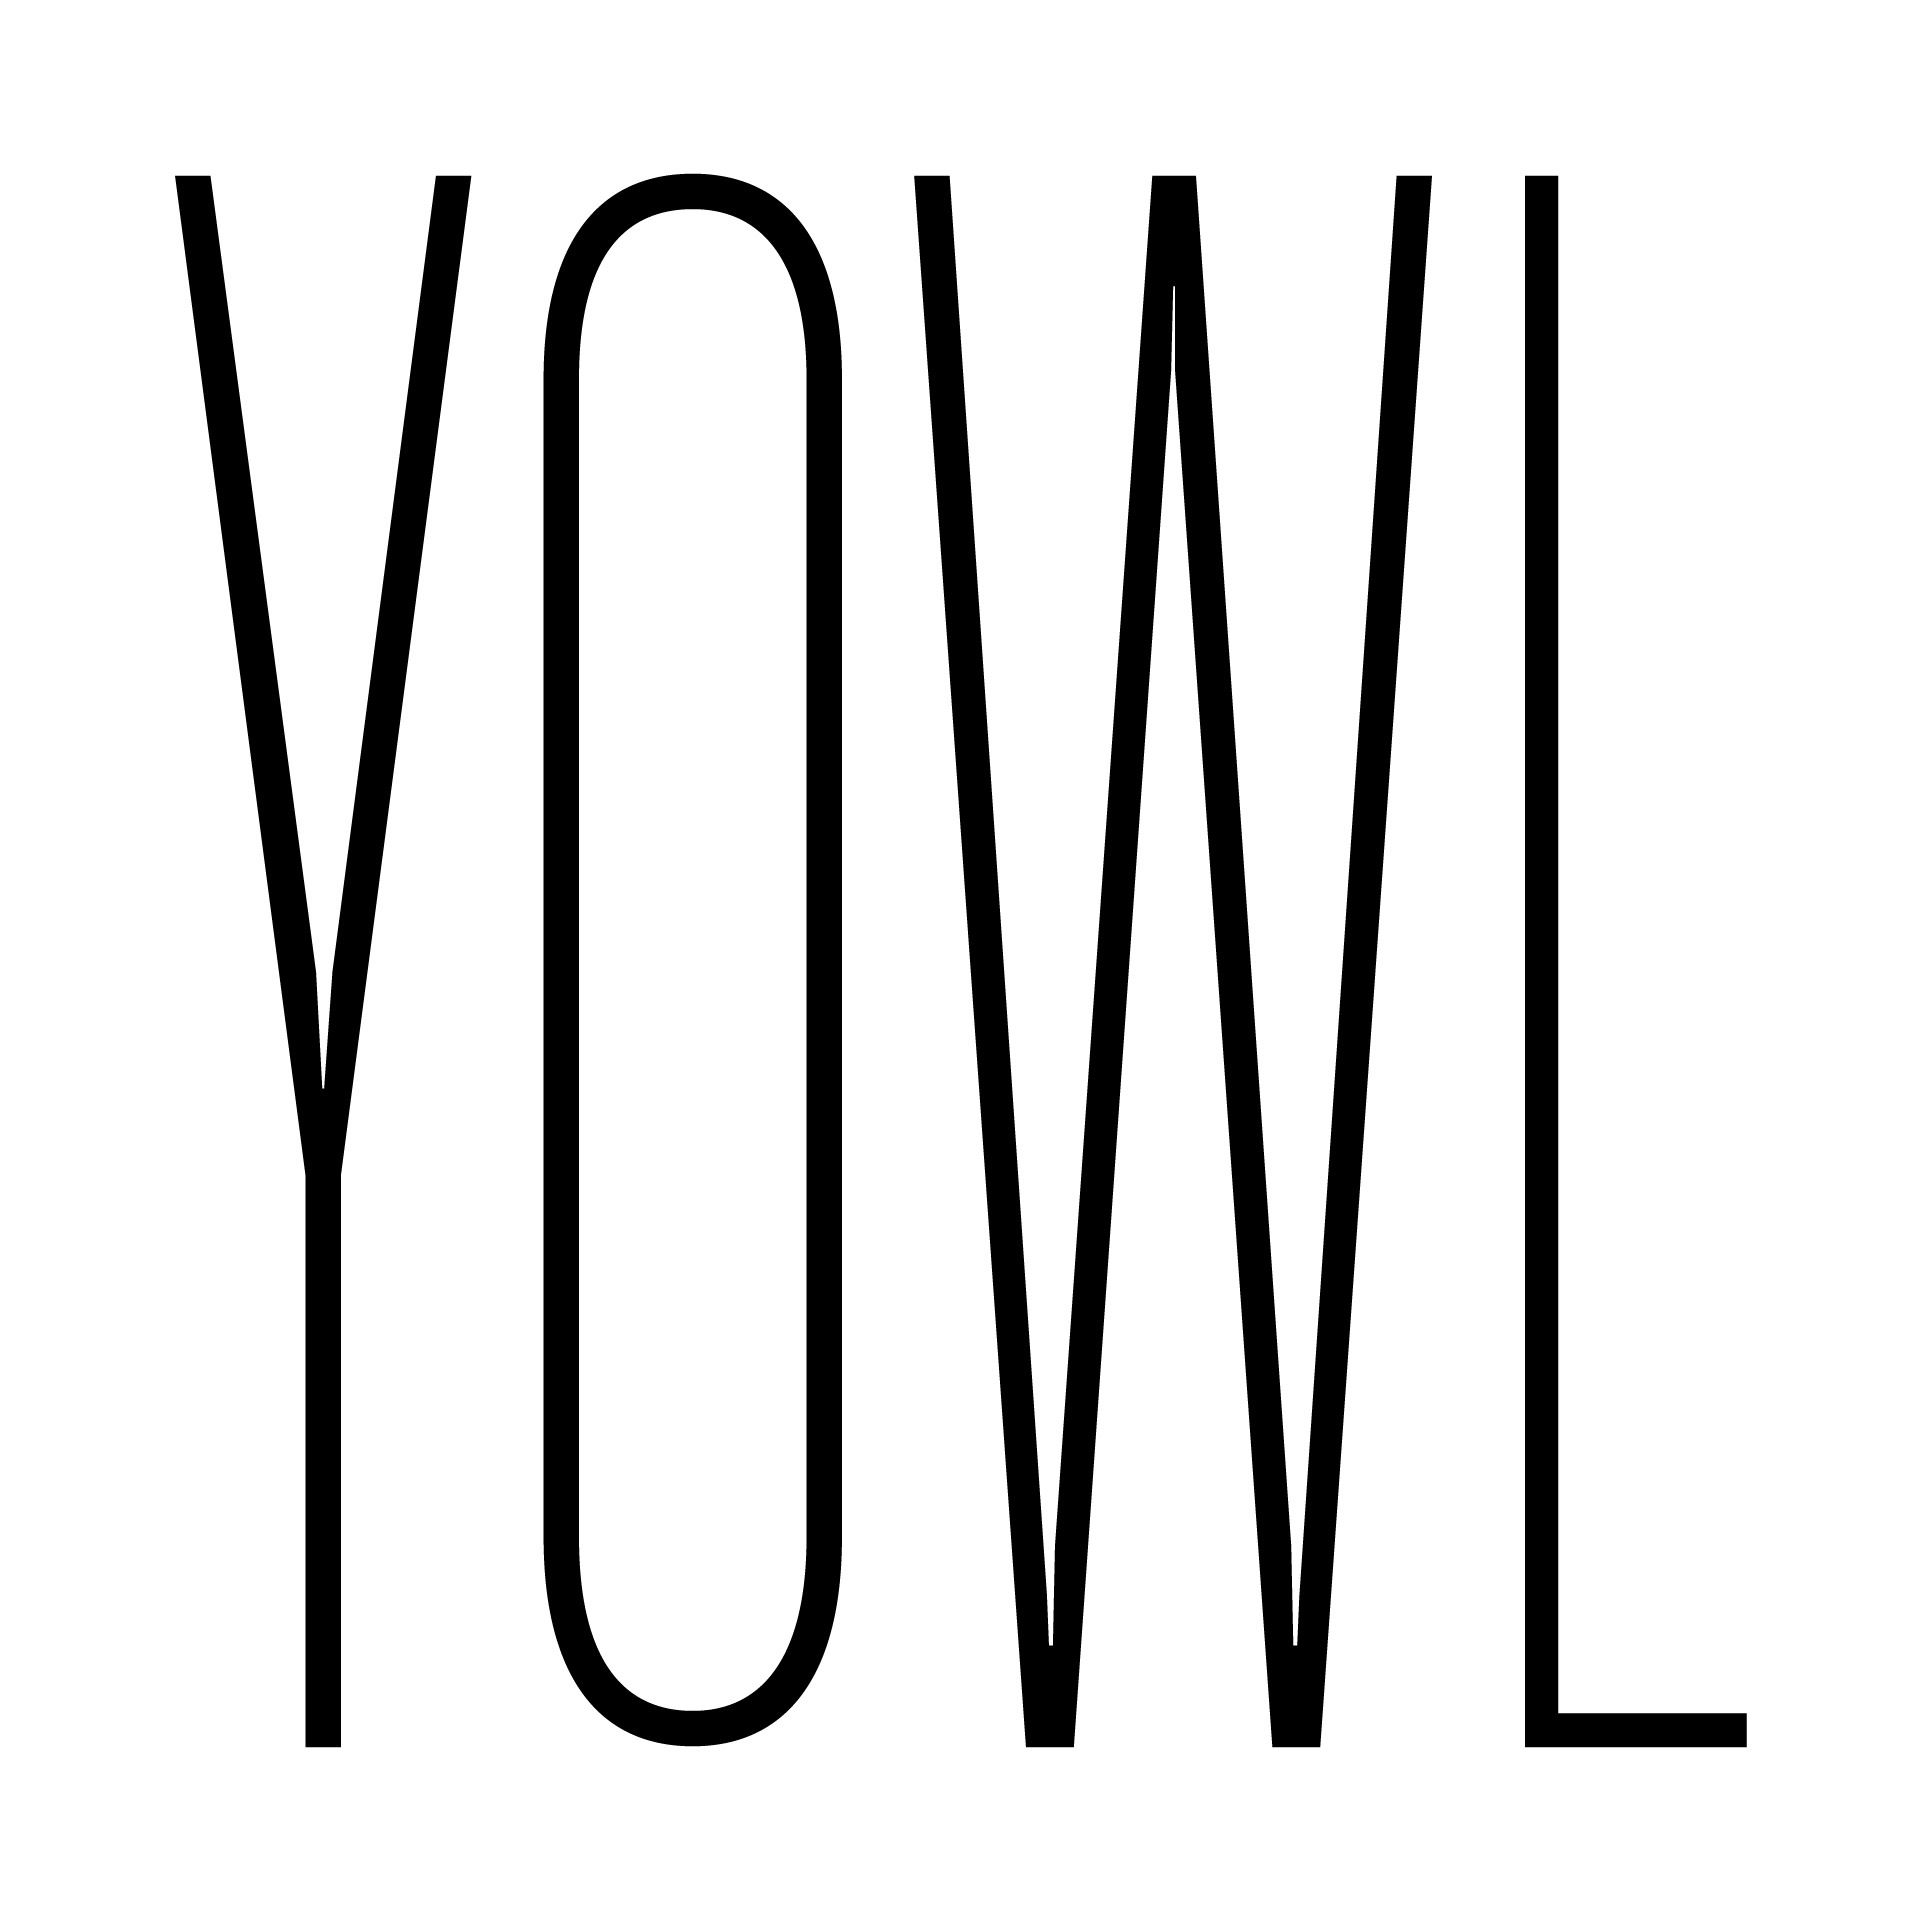 Yowl (UK)